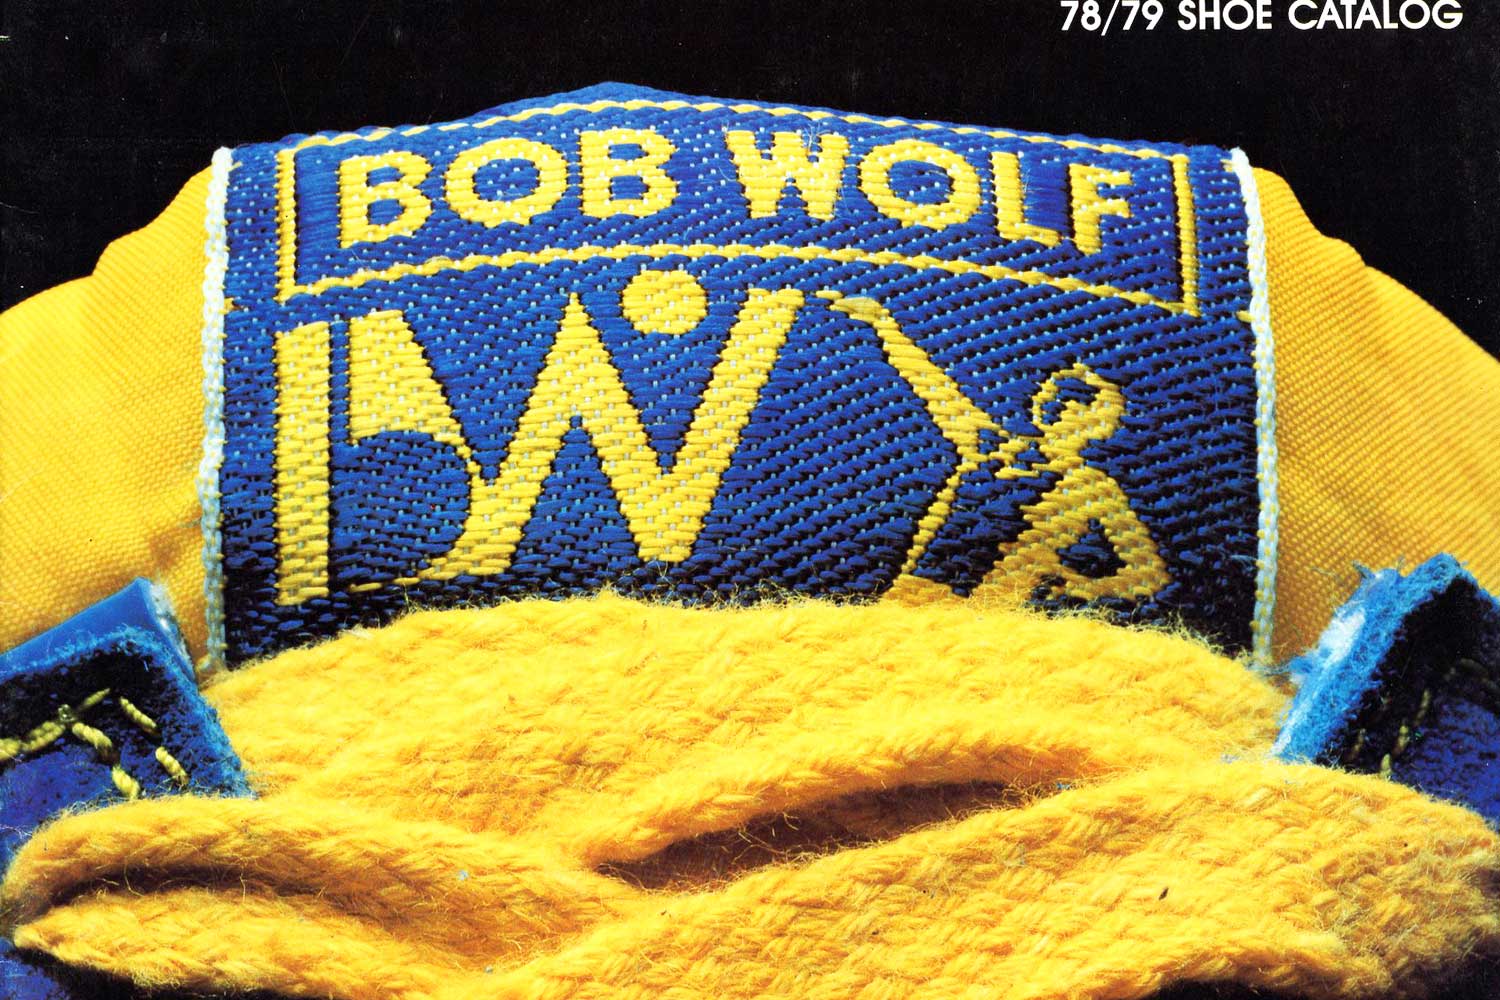 bob wolf shoes